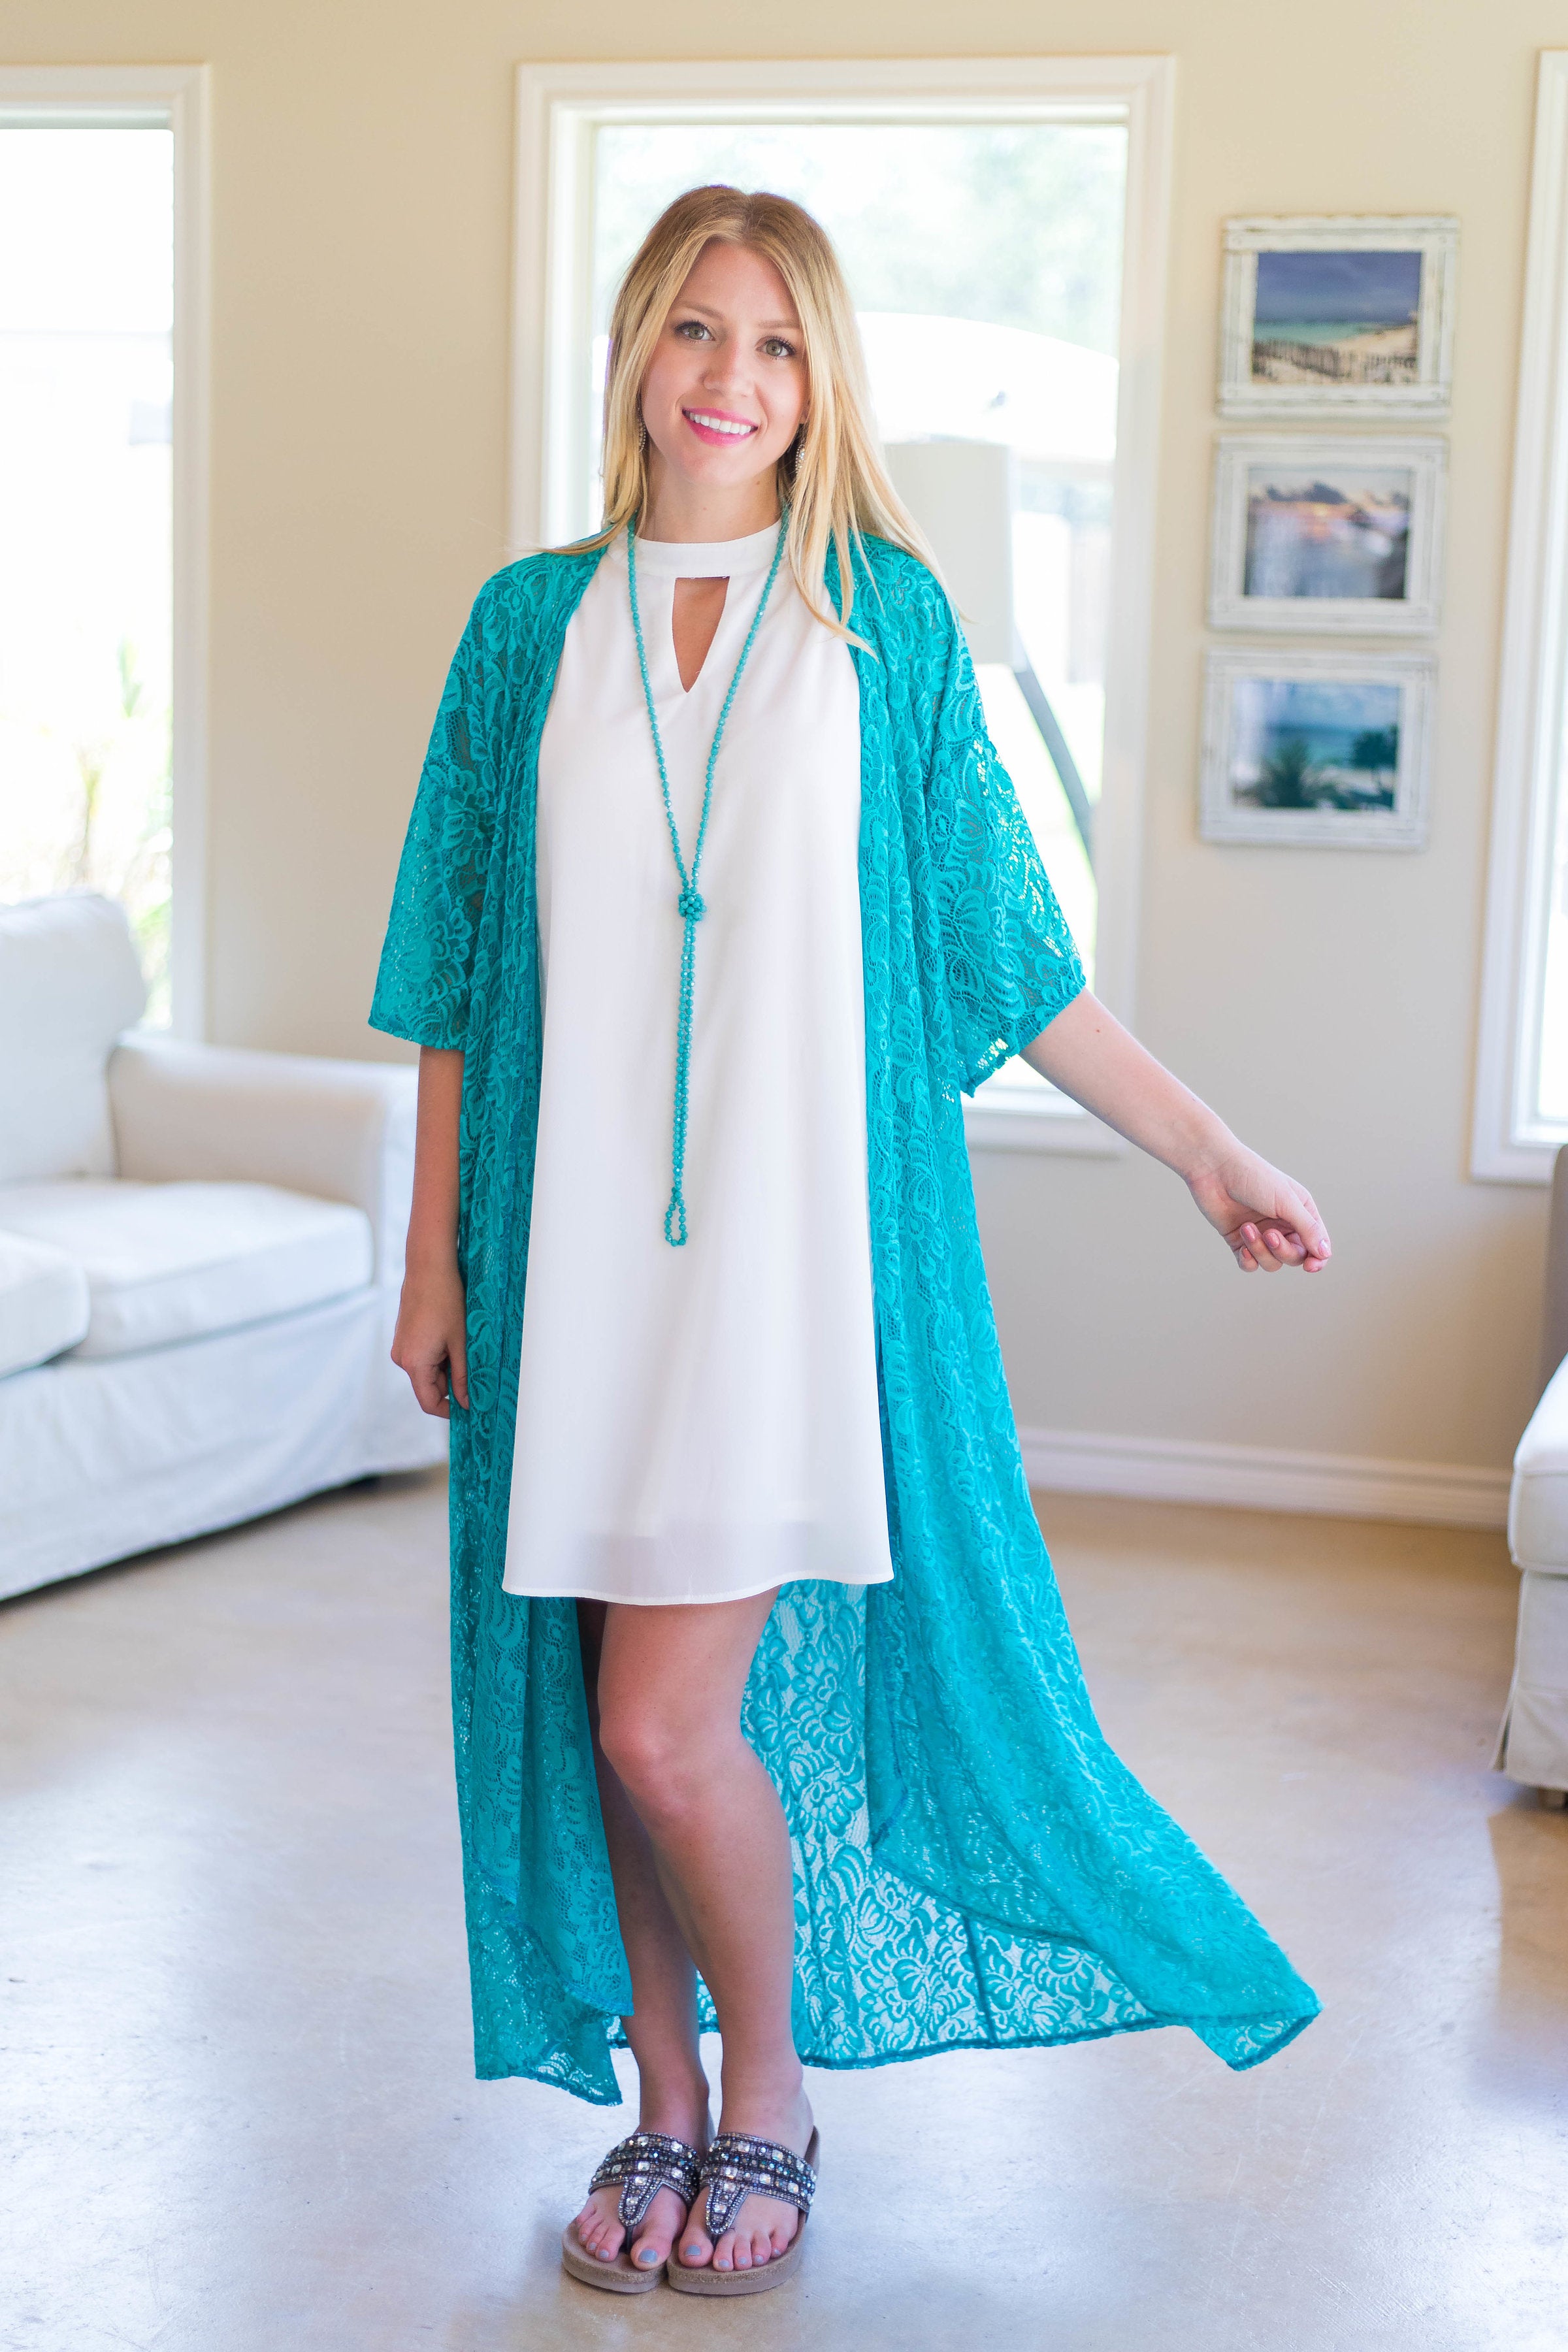 Lace Turquoise Kimonos | Kimono Sheer Lace Turquoise Plus Size Dusters